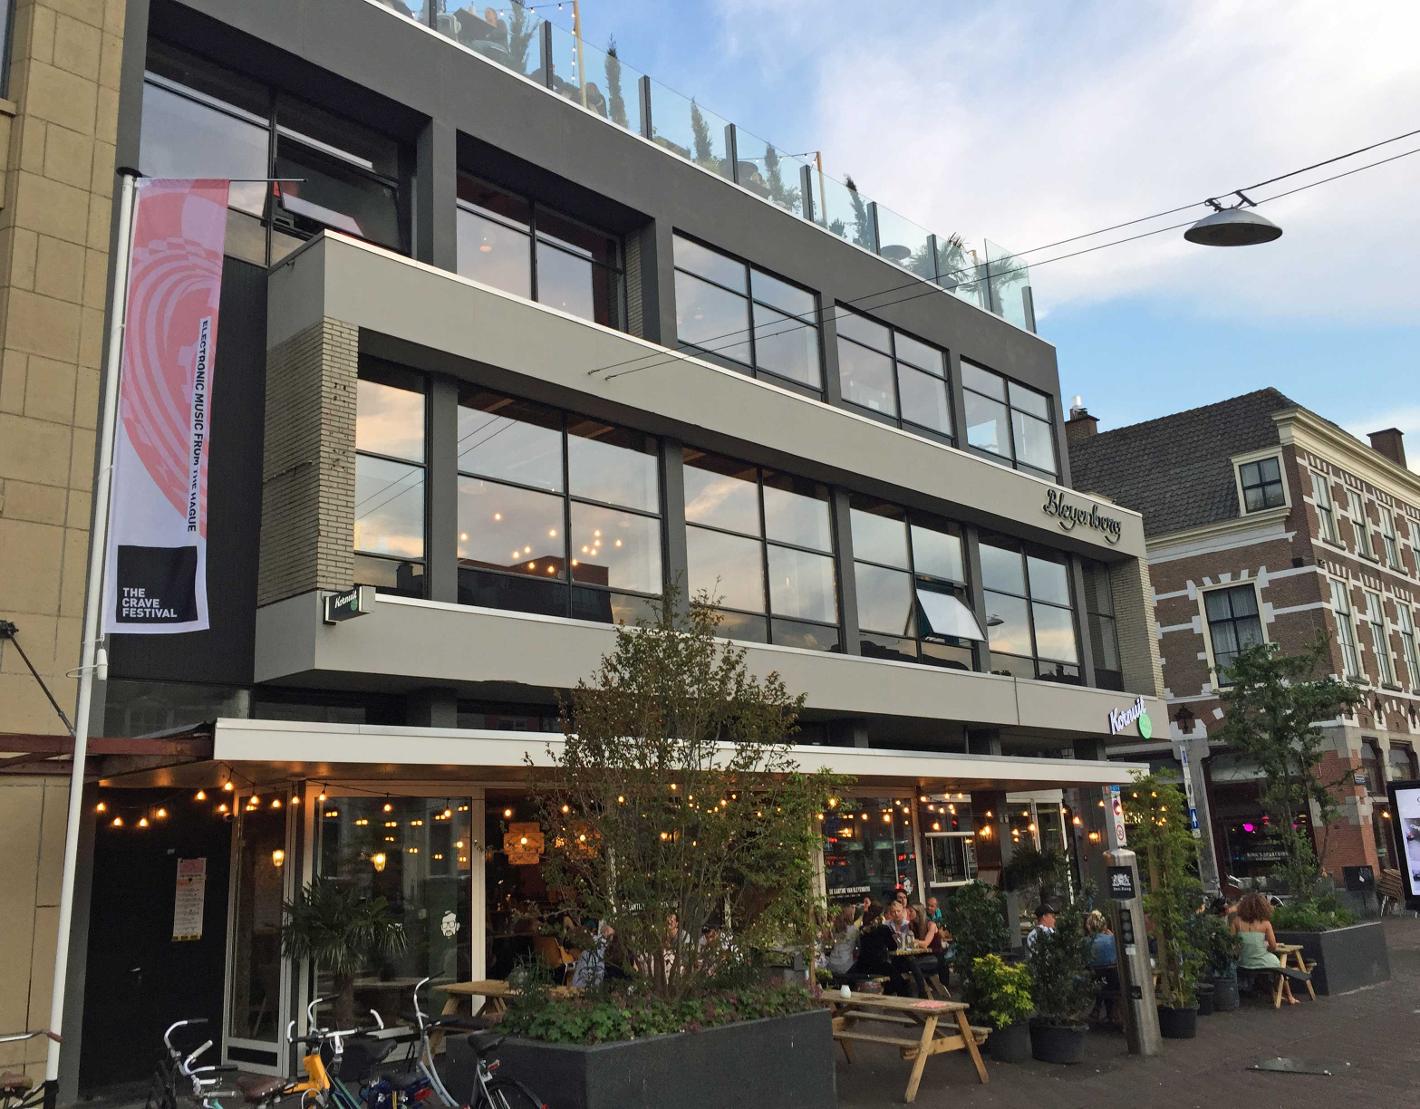 Foto Bleyenburg in Den Haag, Eten & drinken, Koffie, Lunch, Borrel - #1